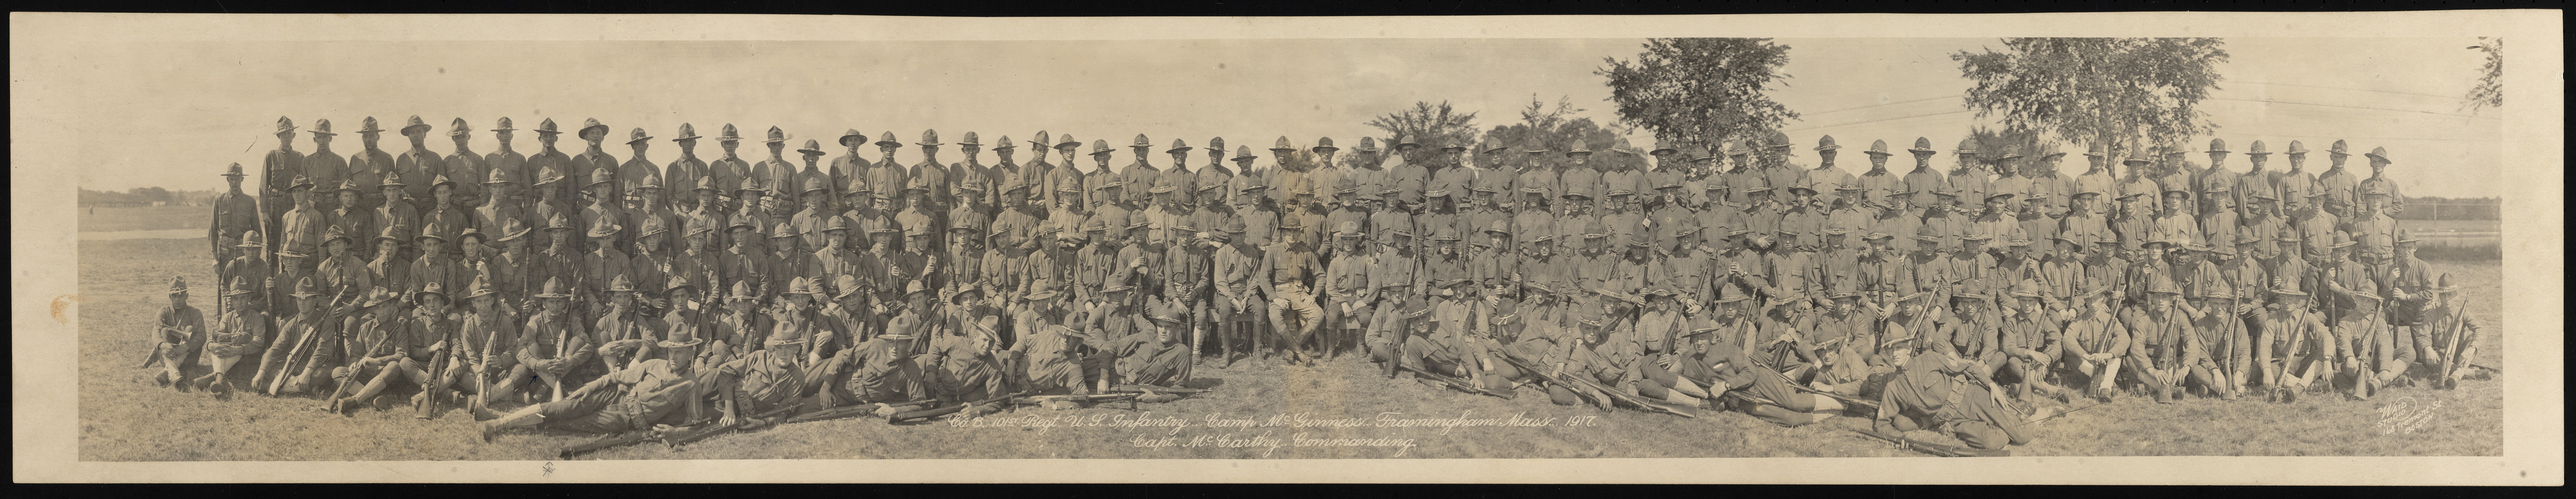 Co. B, 101st Regt. U.S. Infantry, Camp McGinness, Framingham Mass, 1917. Capt. McCarthy commanding